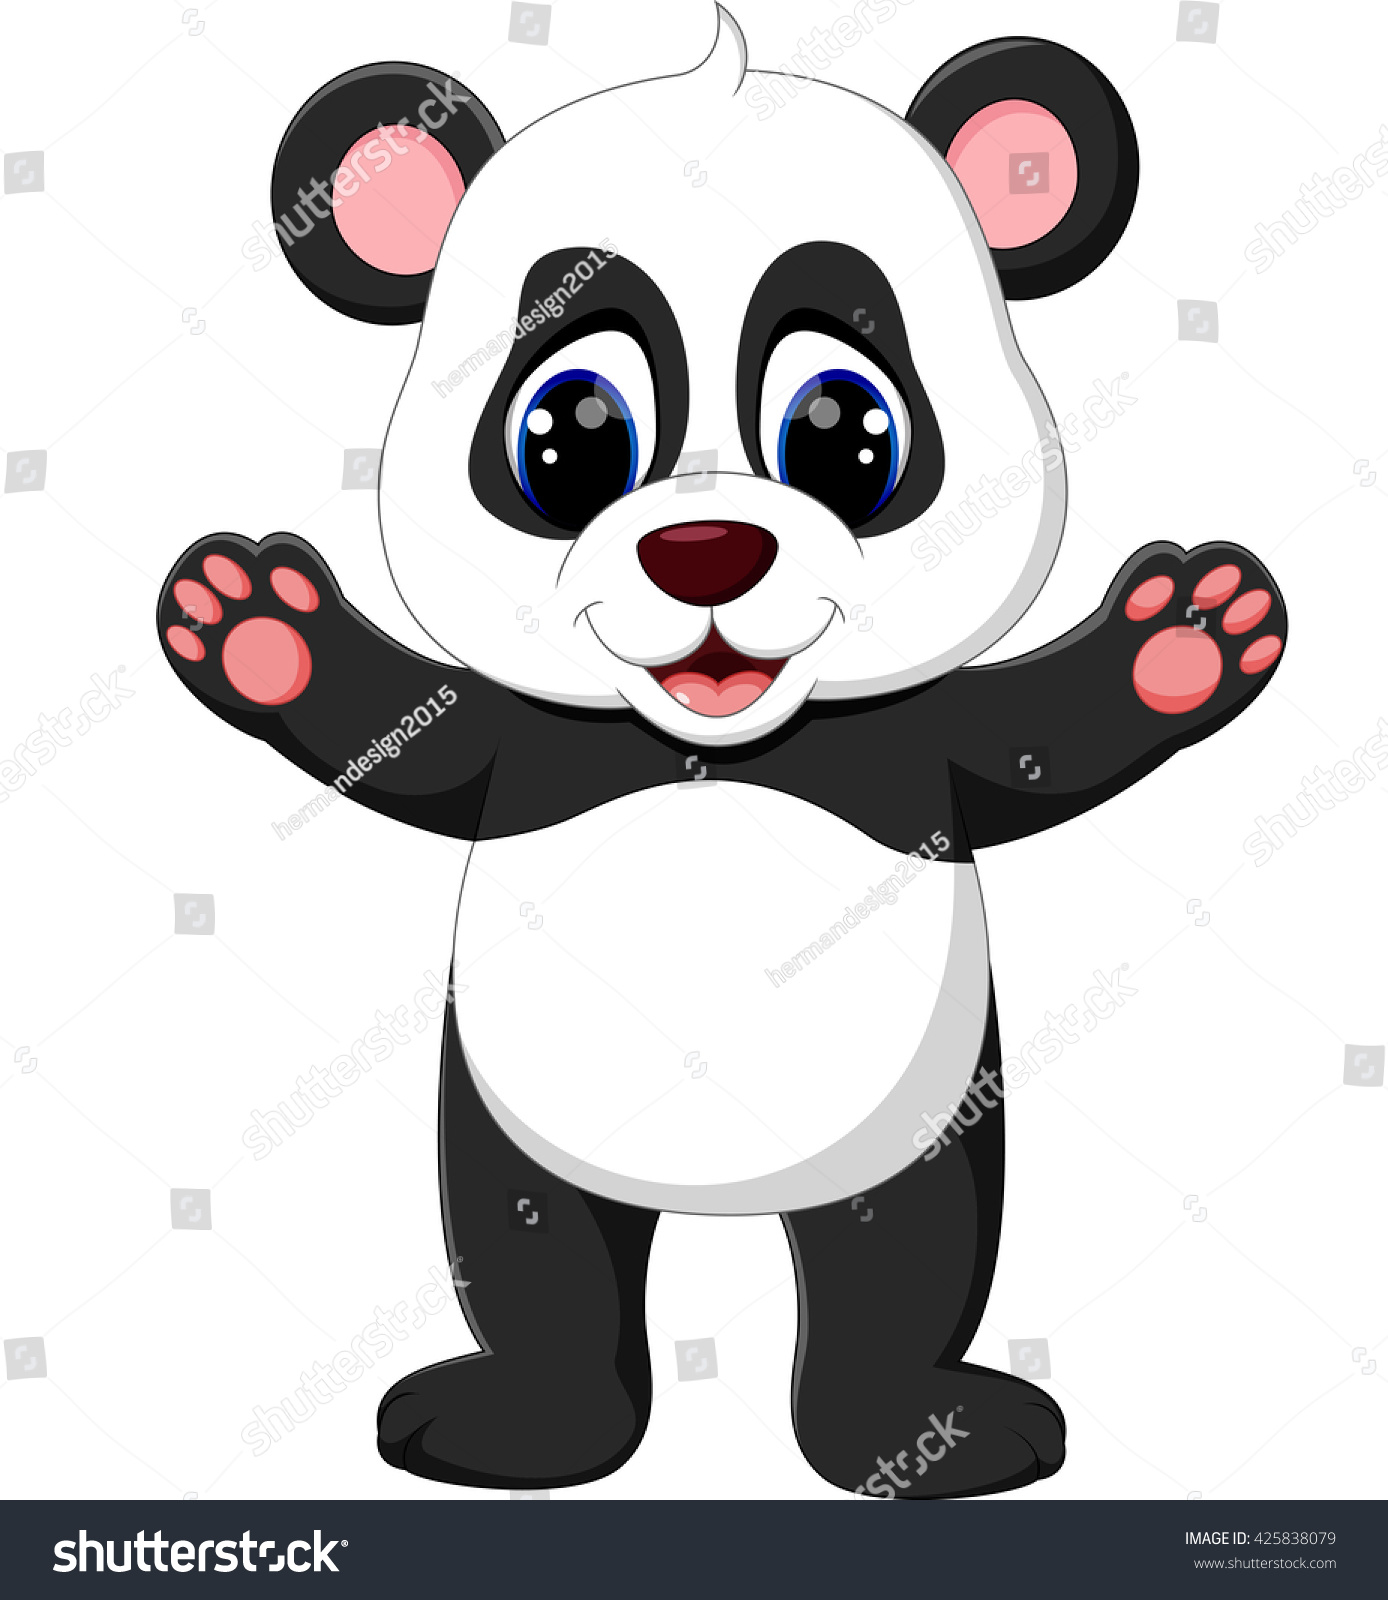 Illustration Of Cute Baby Panda Cartoon - 425838079 : Shutterstock